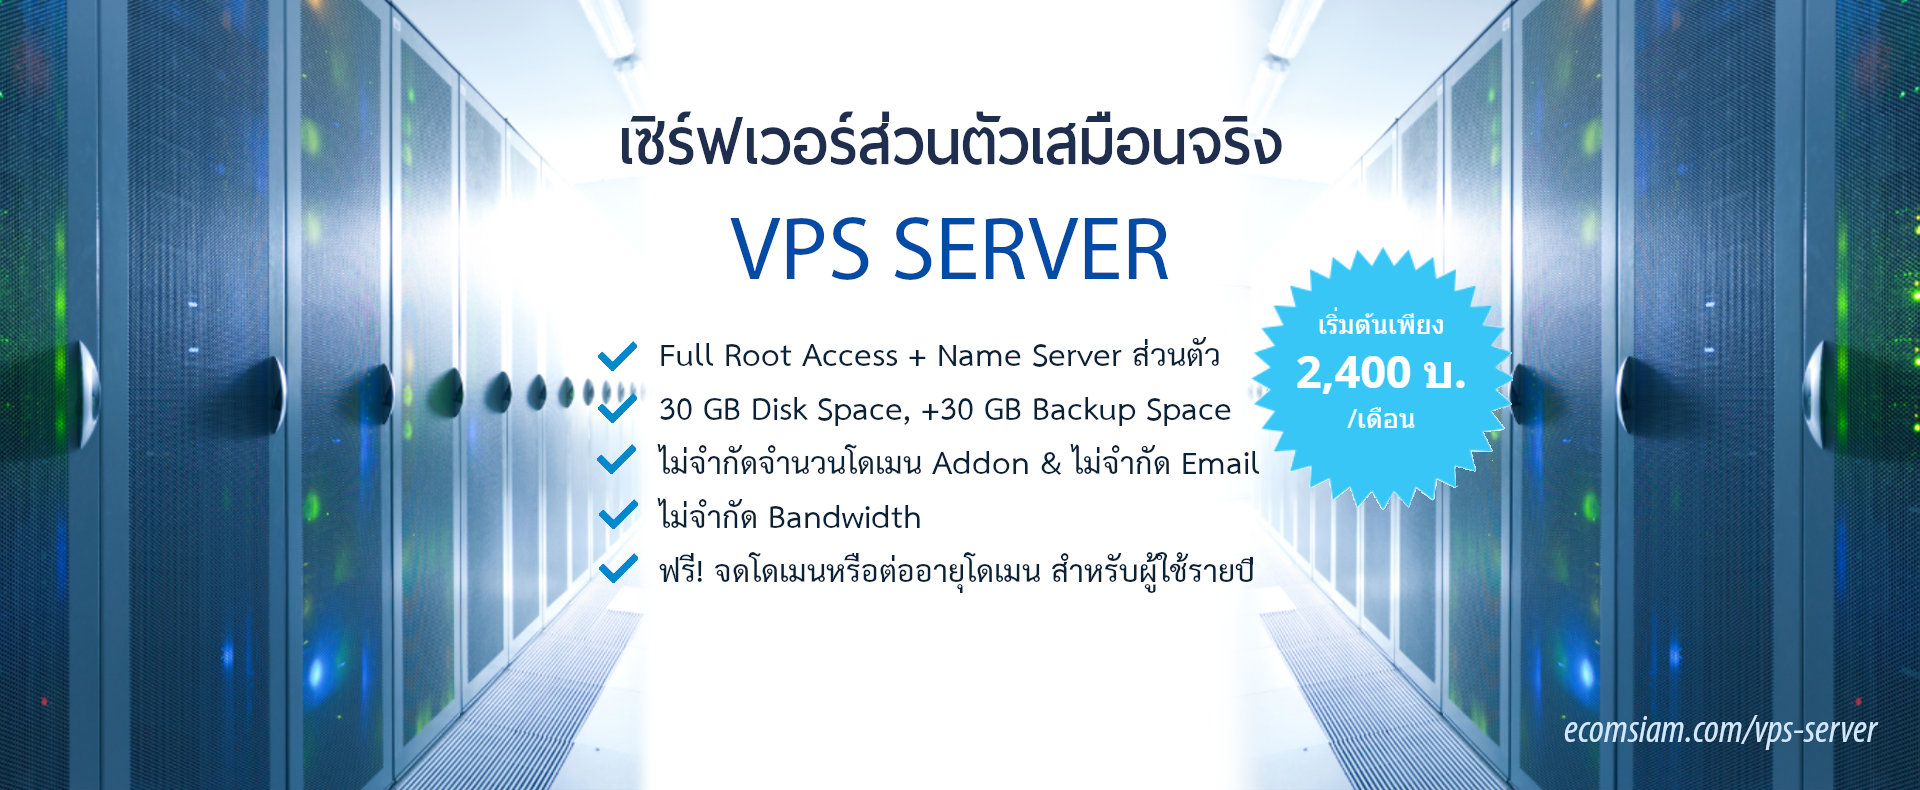 VPS Server ไทย thailand /Full Root Access พร้อม Name Server ส่วนตัว ไม่จำกัดจำนวนโดเมน Addon host / ไม่จำกัด Email Addresses เริ่มต้นพื้นที่ 50 GB Disk Space, +50 GB Backup Space